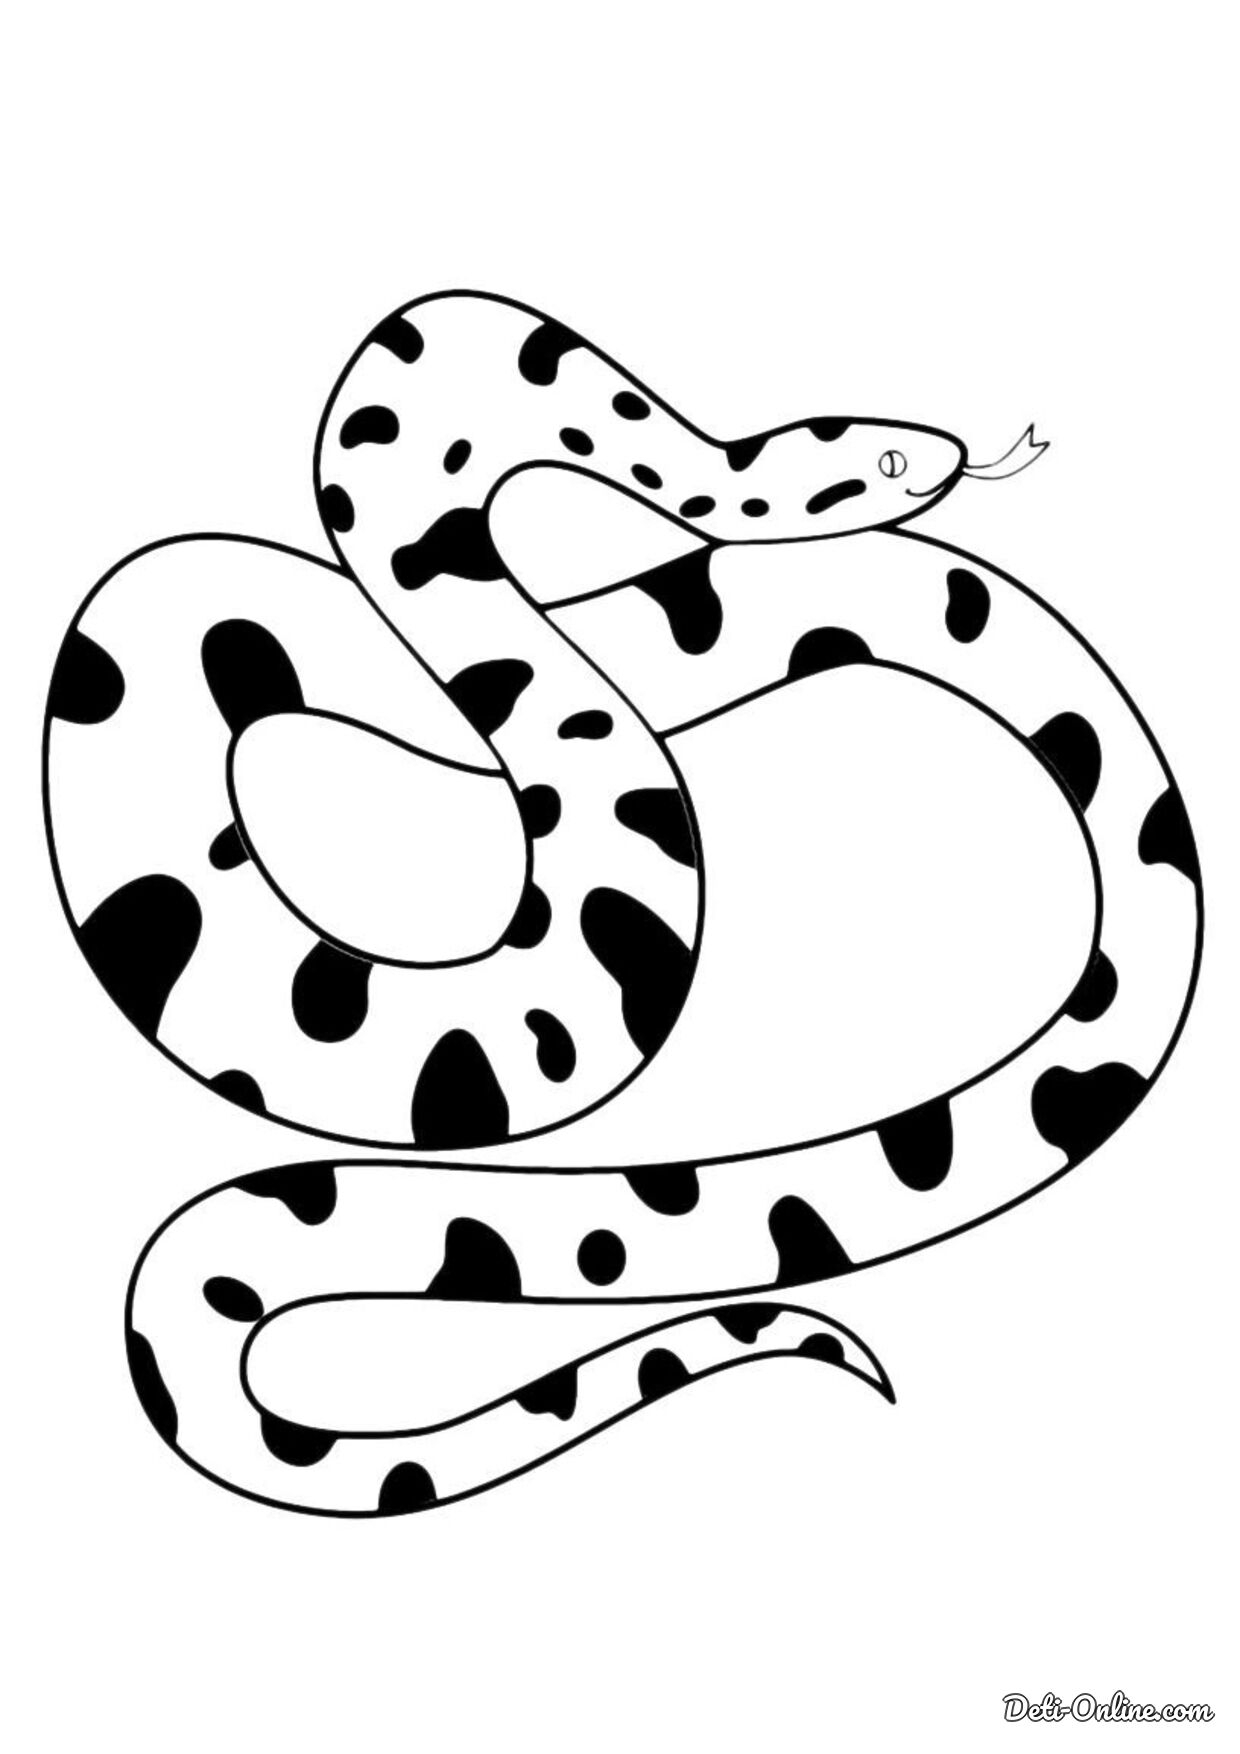 Раскраски змей распечатать. Змея раскраска. Раскраска о змеях. Раскраска змеи для детей. Змея расскра.